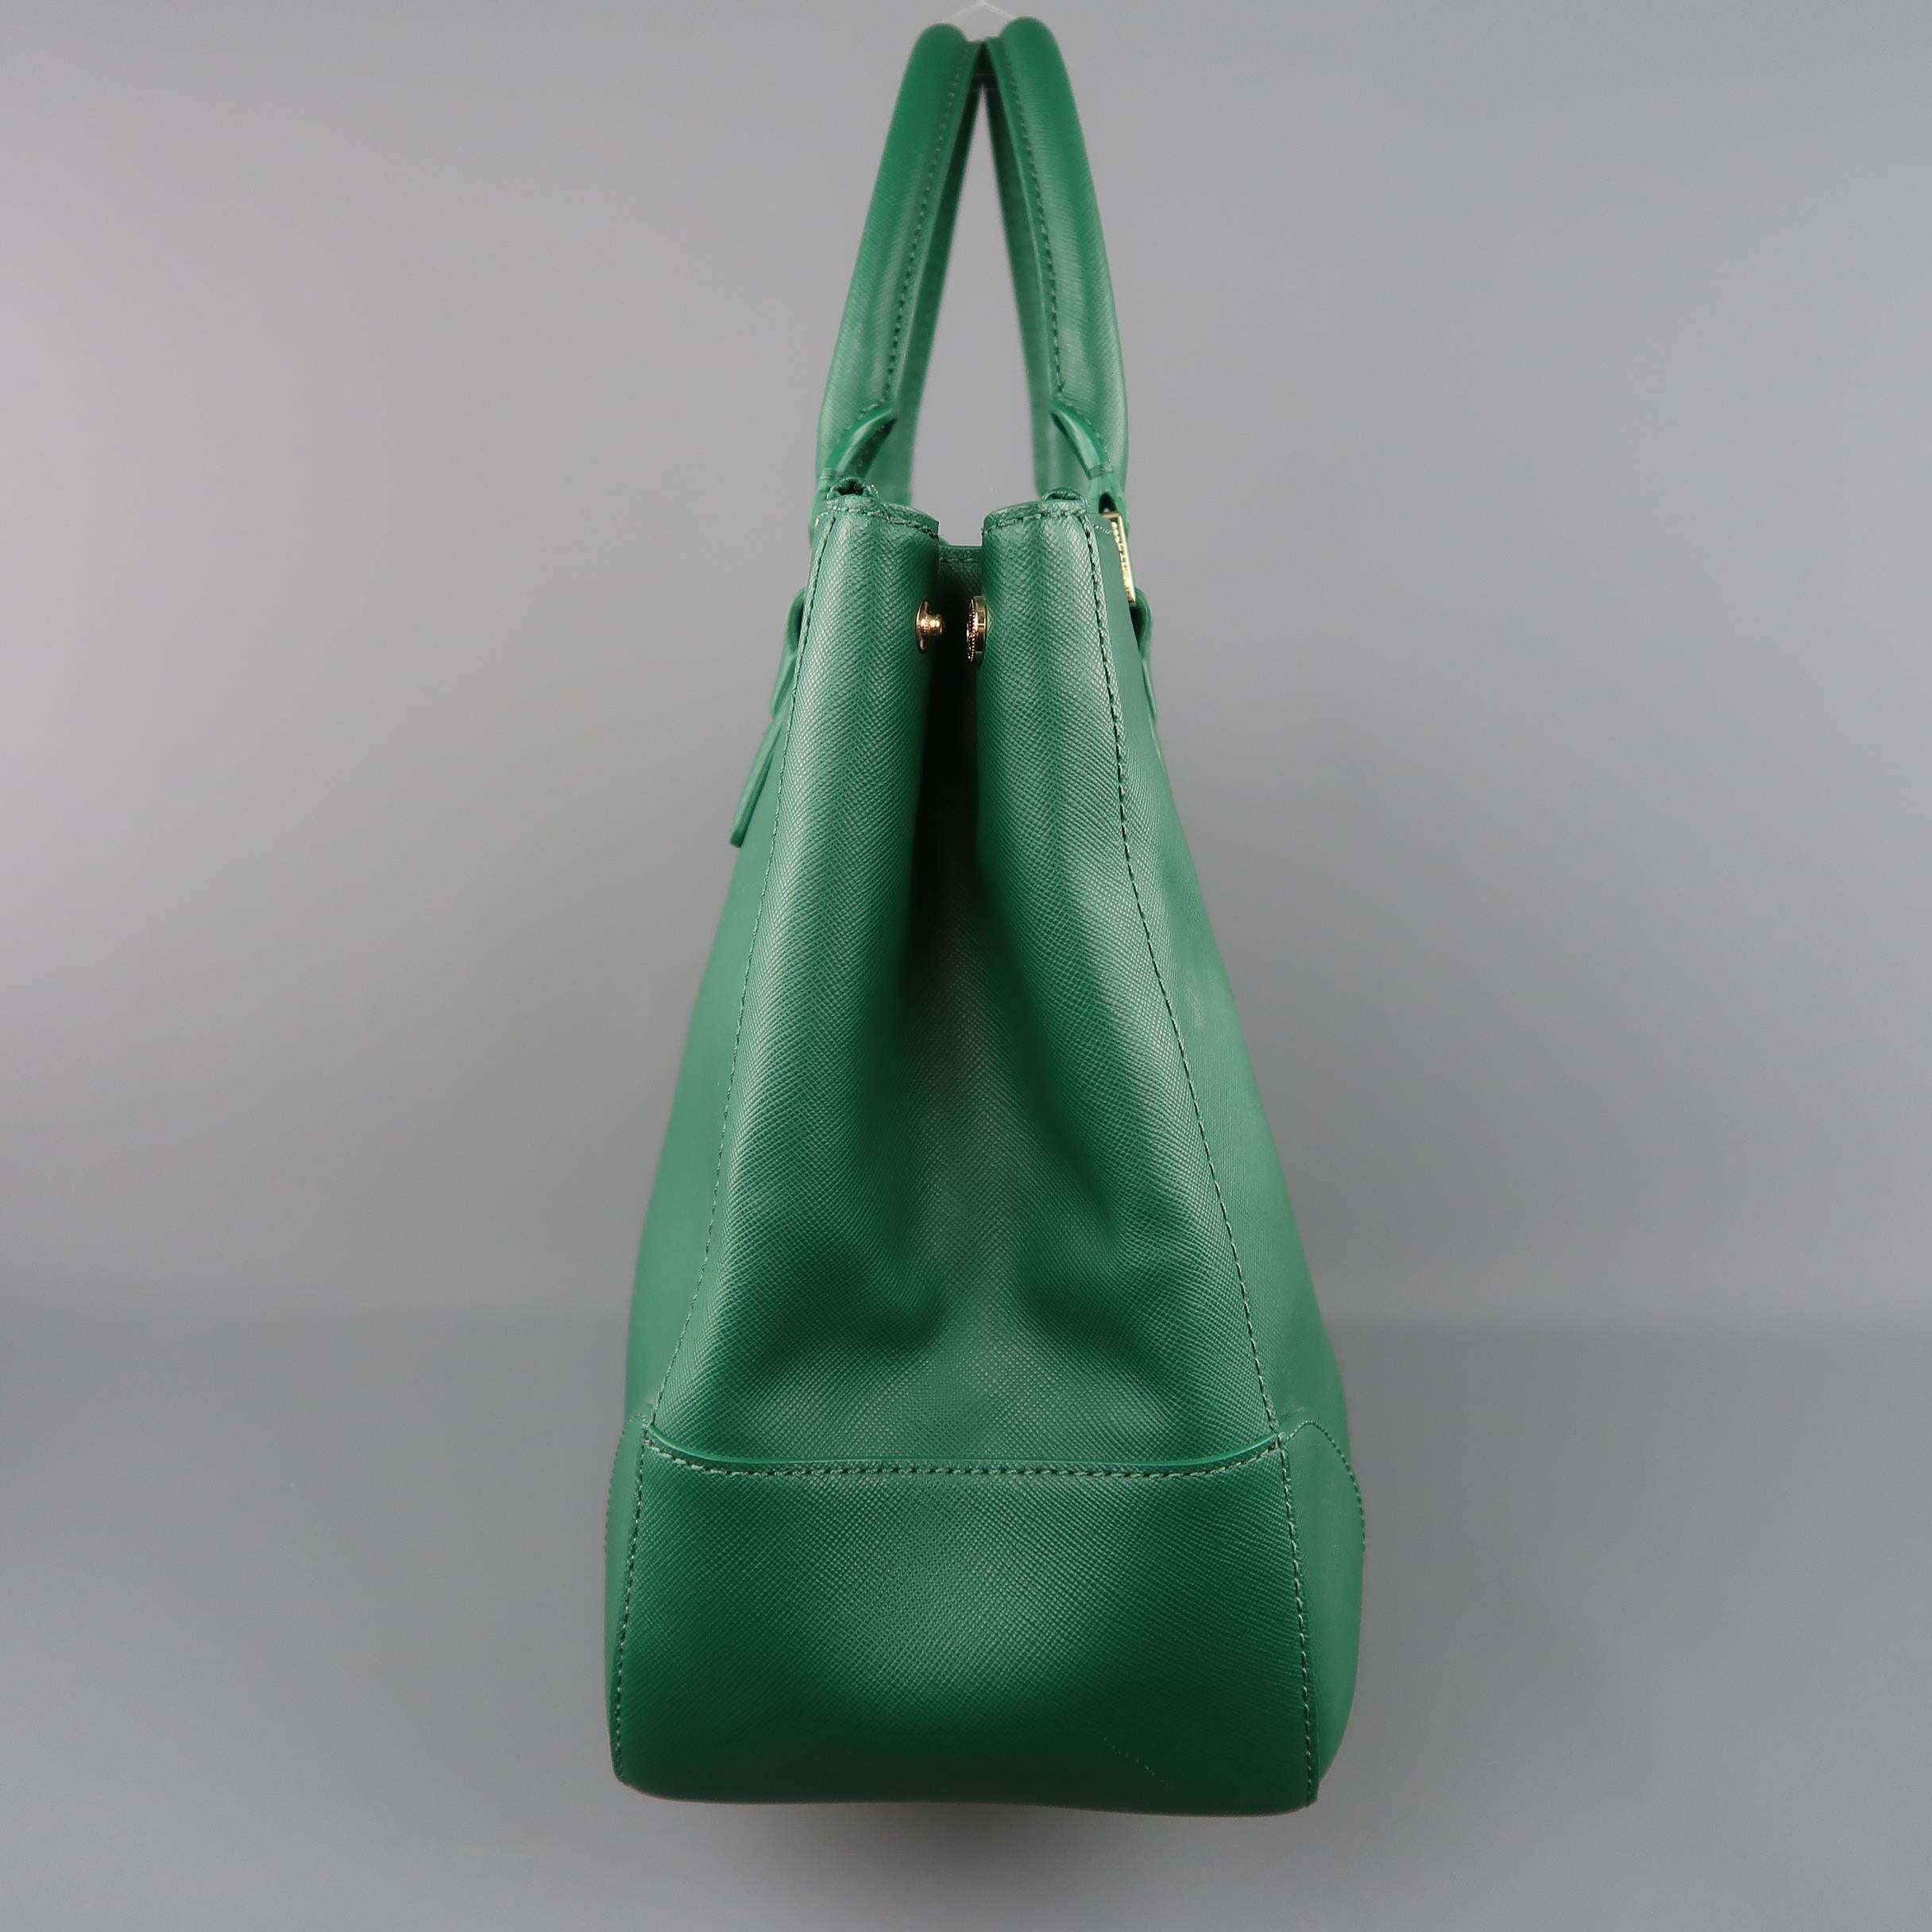 Women's TORY BURCH Green Leather ROBINSON Tote Handbag